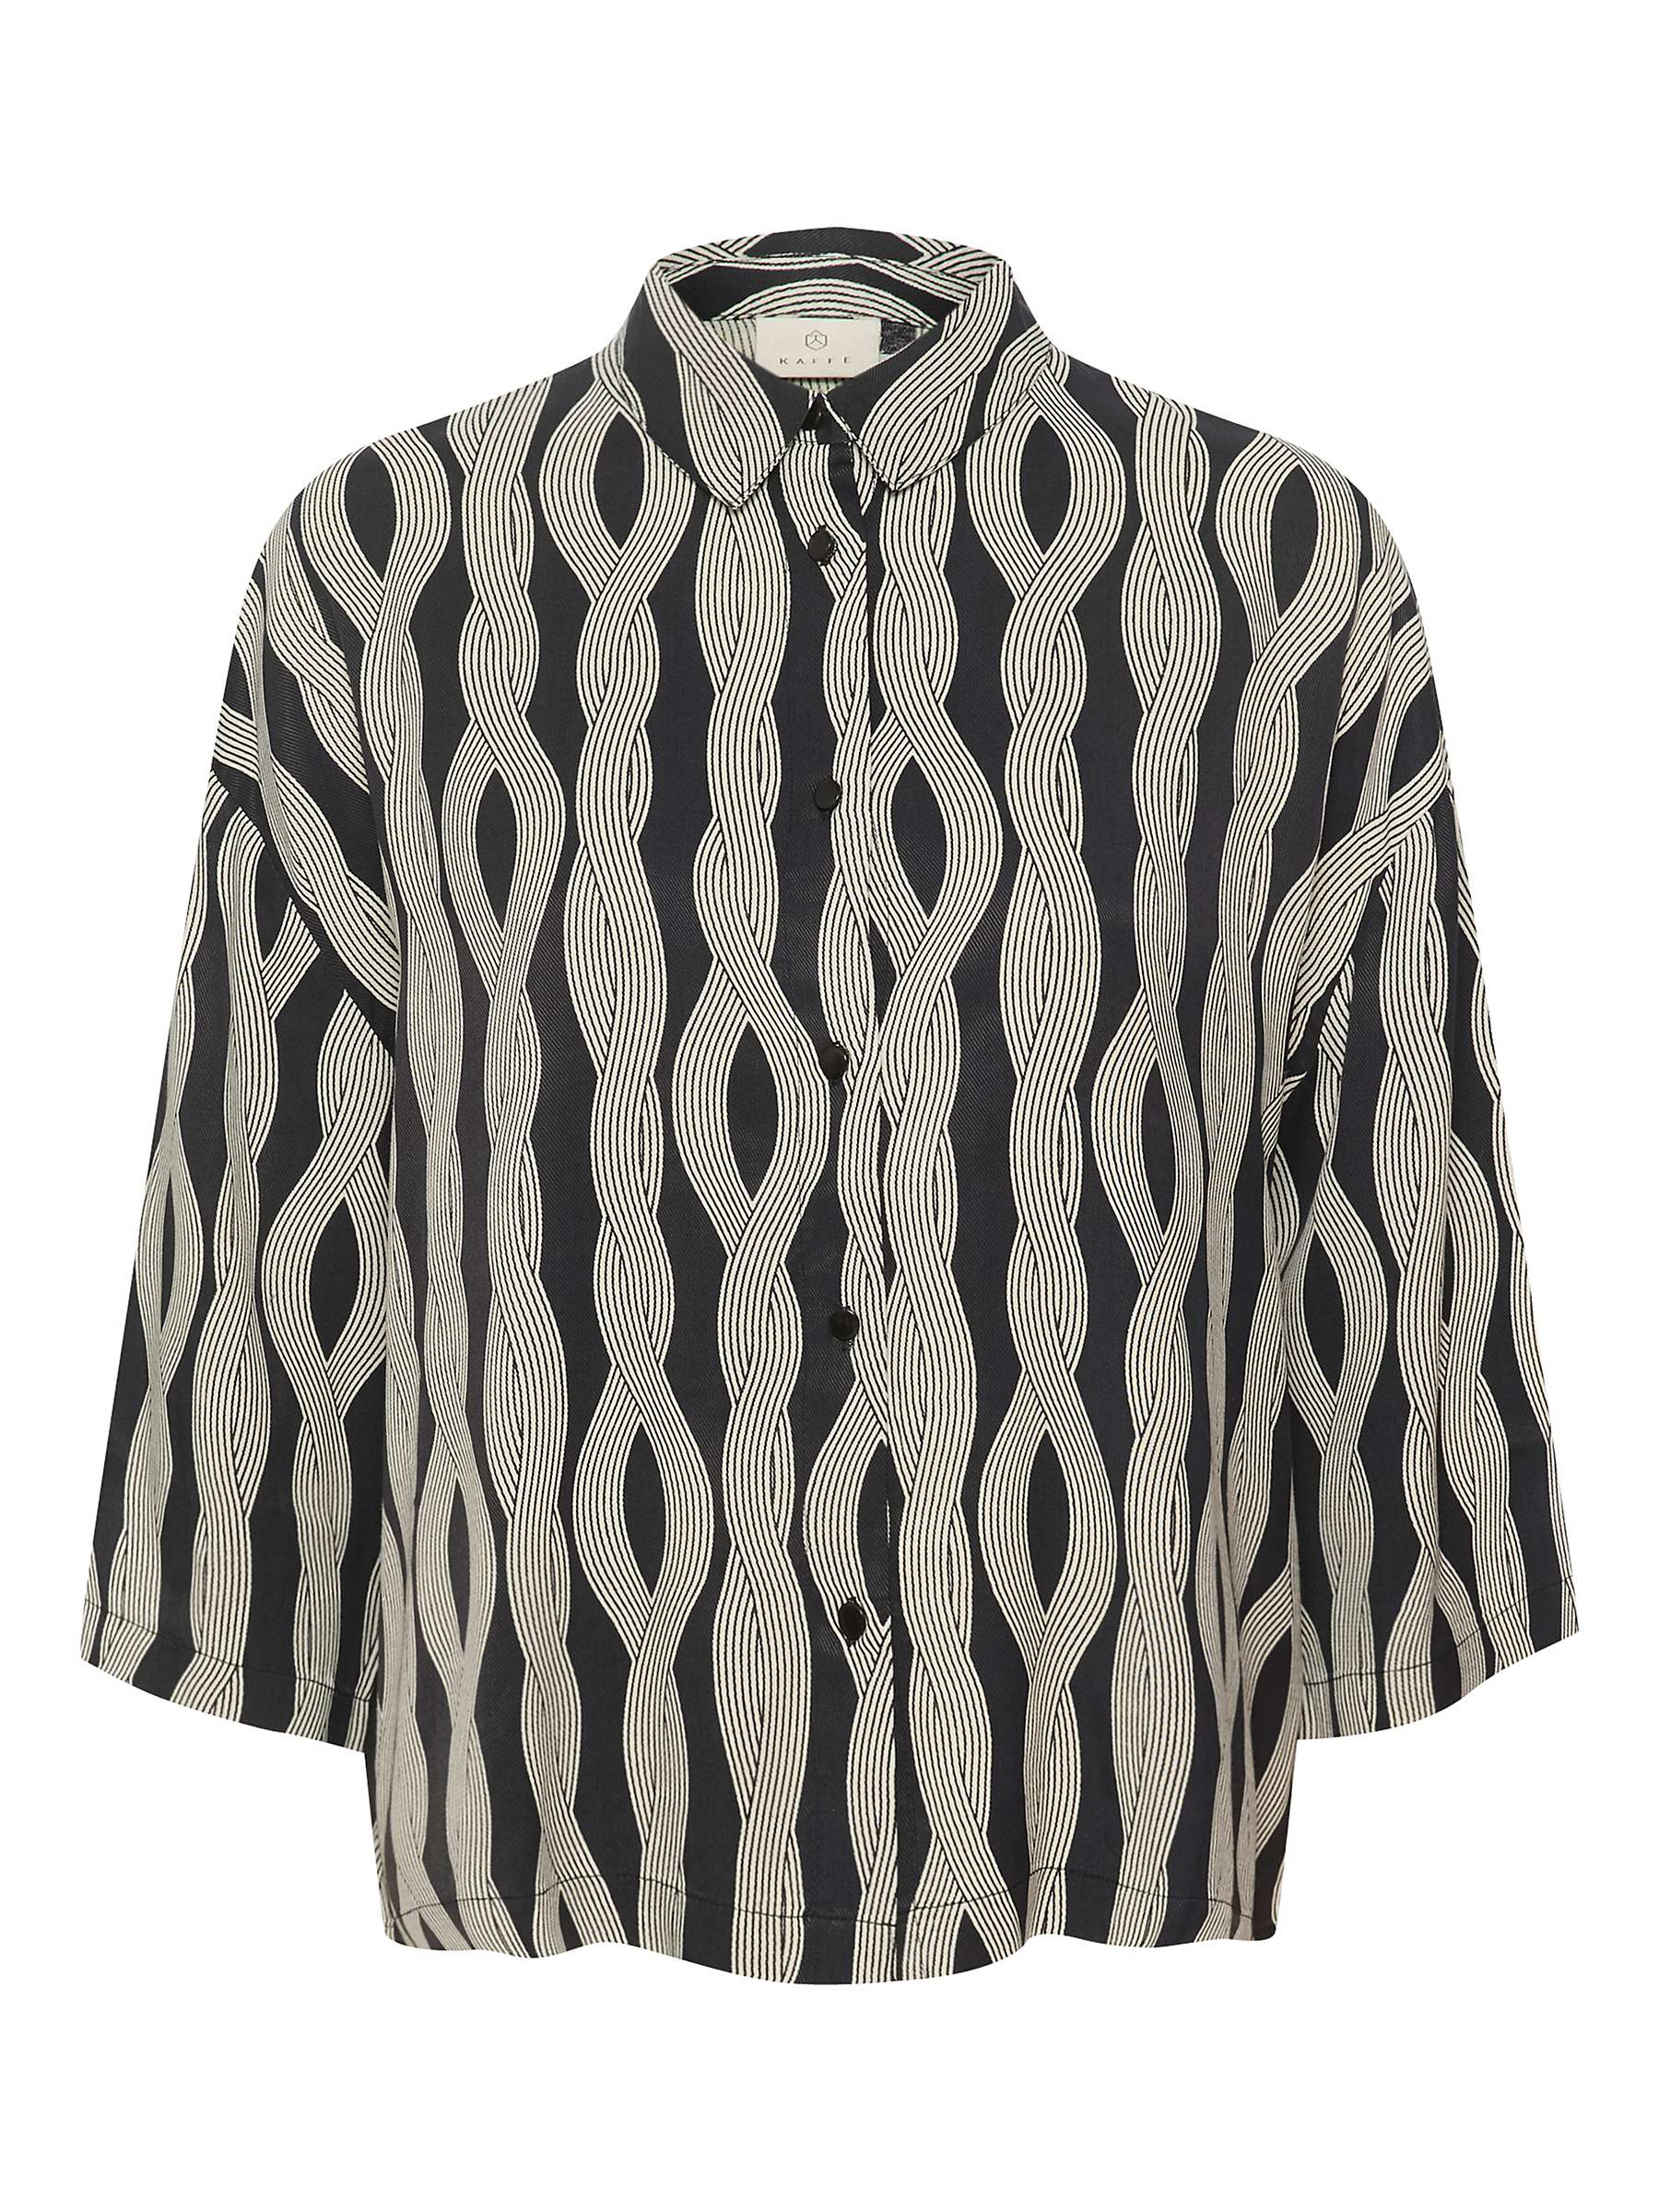 Buy KAFFE Carlbie Ecovero Casual Fit 3/4 Sleeve Shirt, Black Online at johnlewis.com